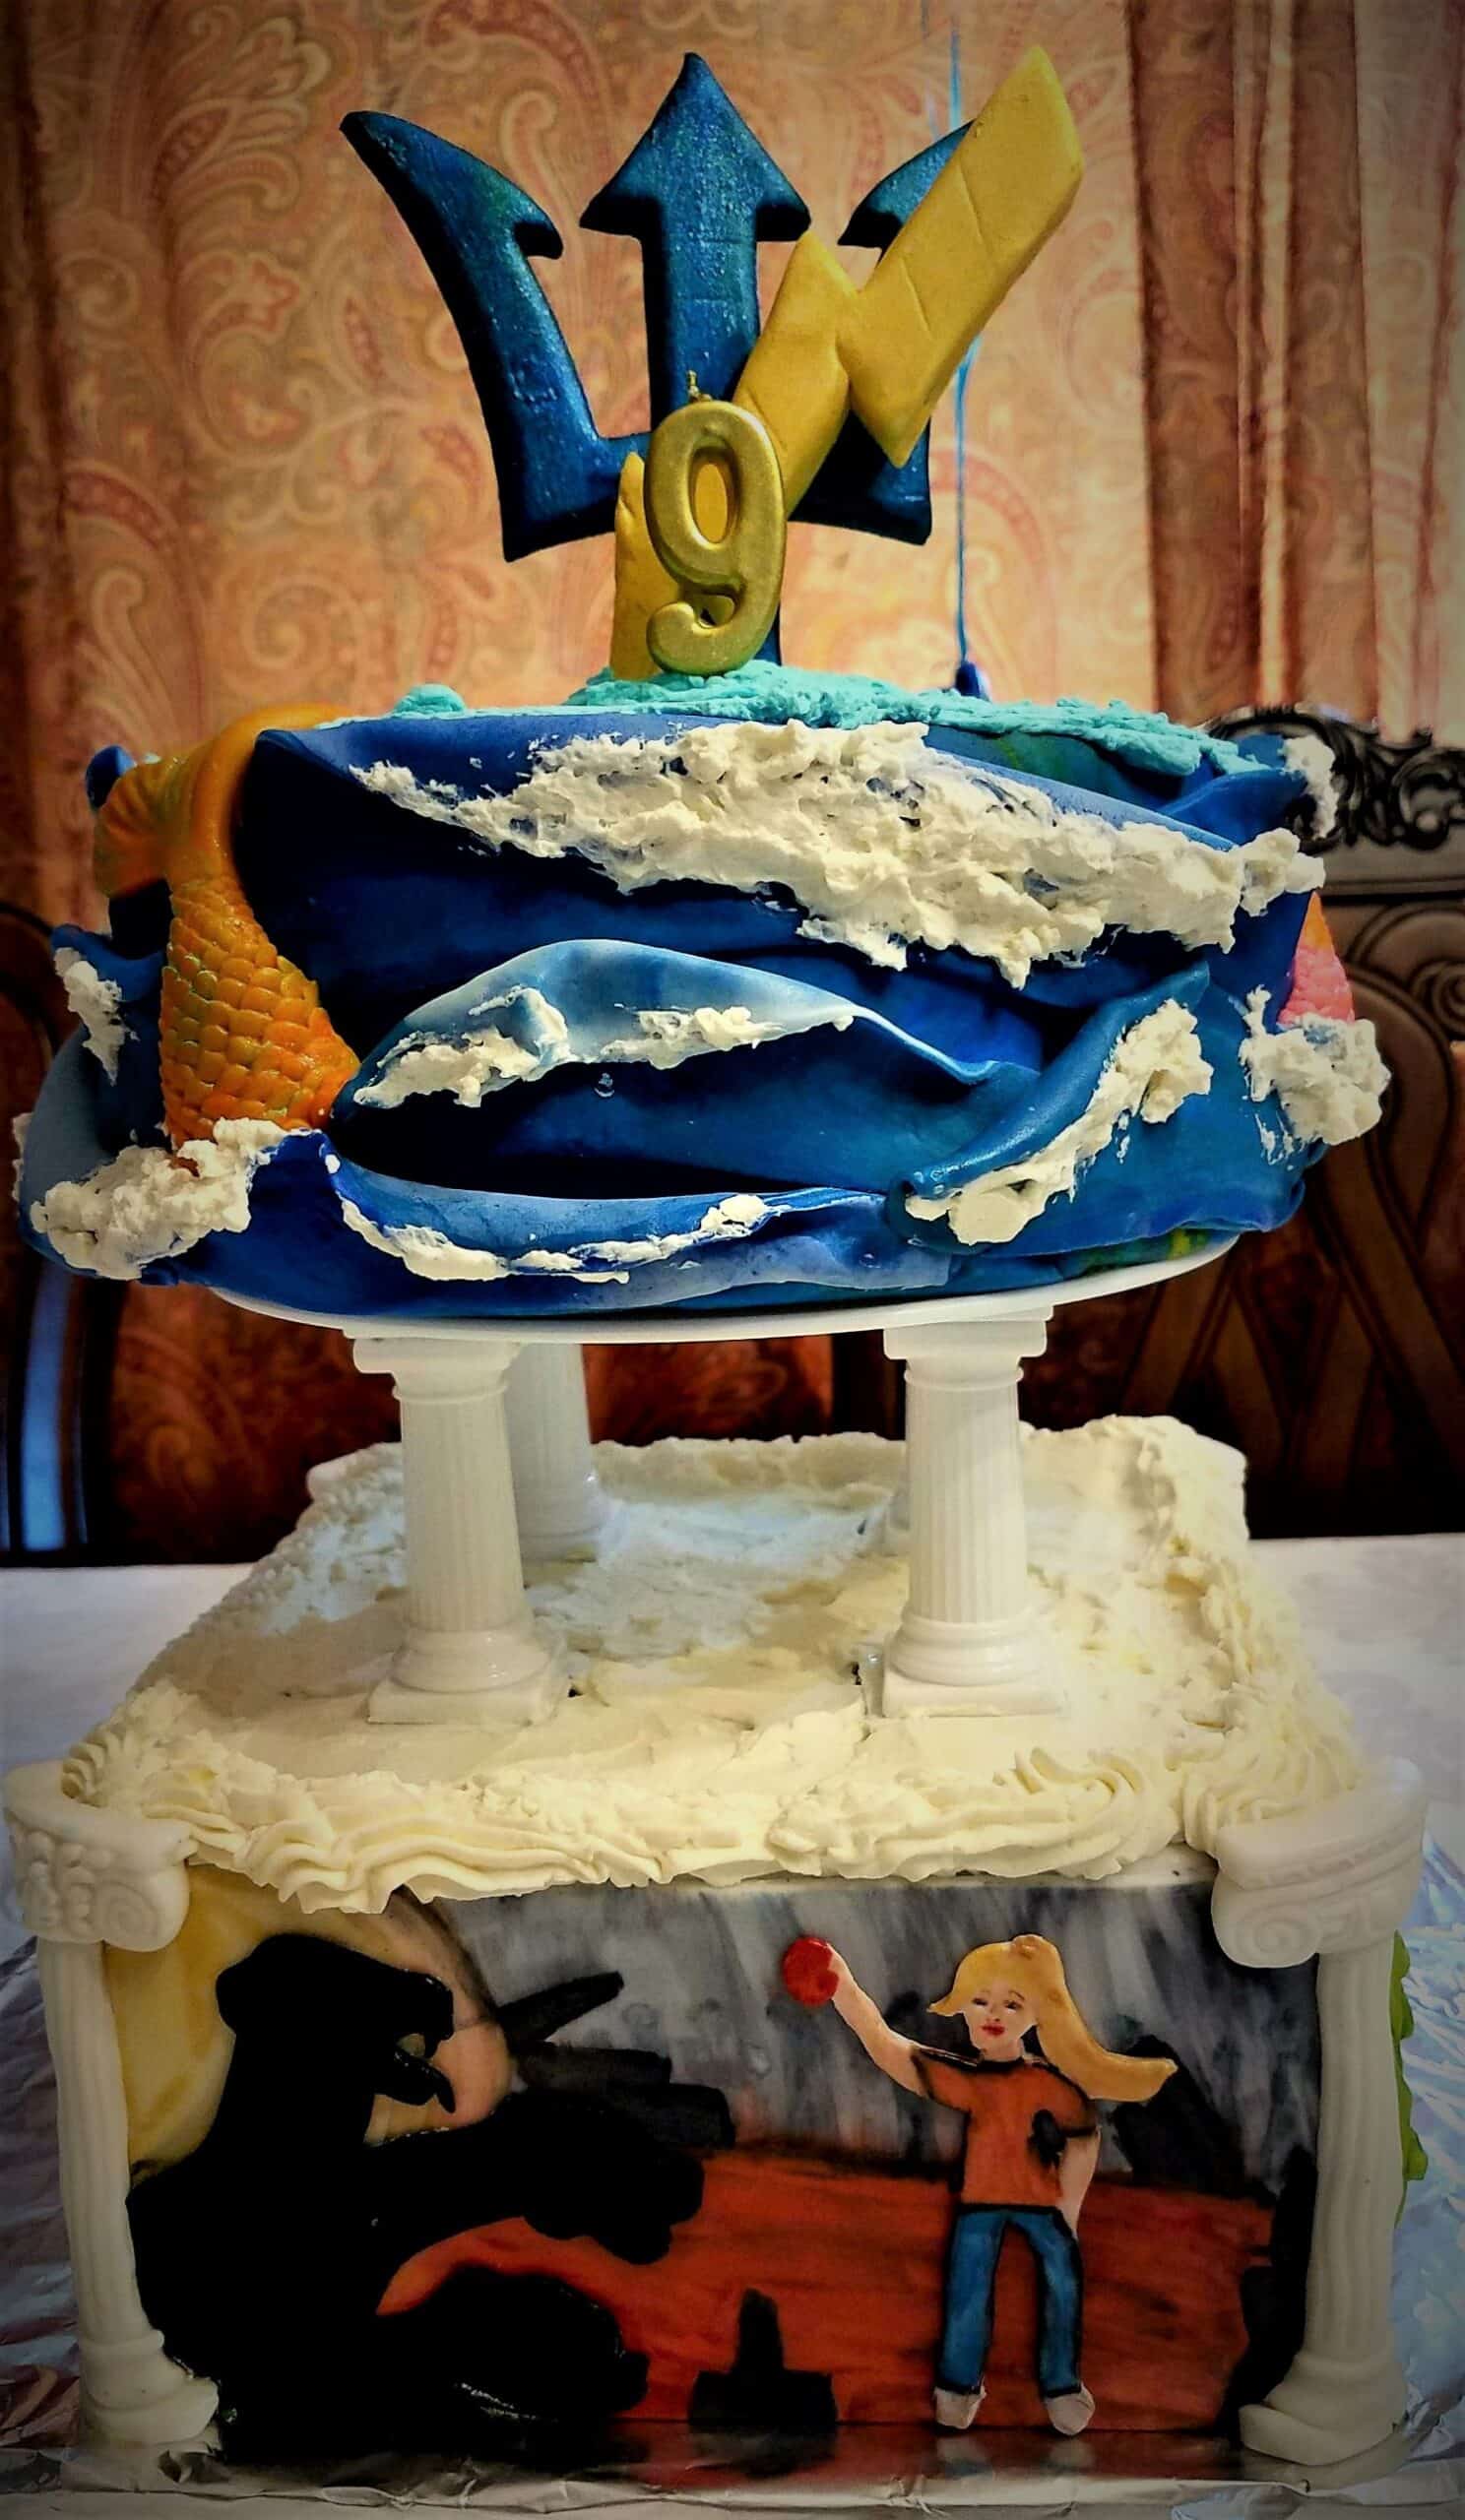 My birthday cake 🎂 - Everything Percy Jackson - Quora